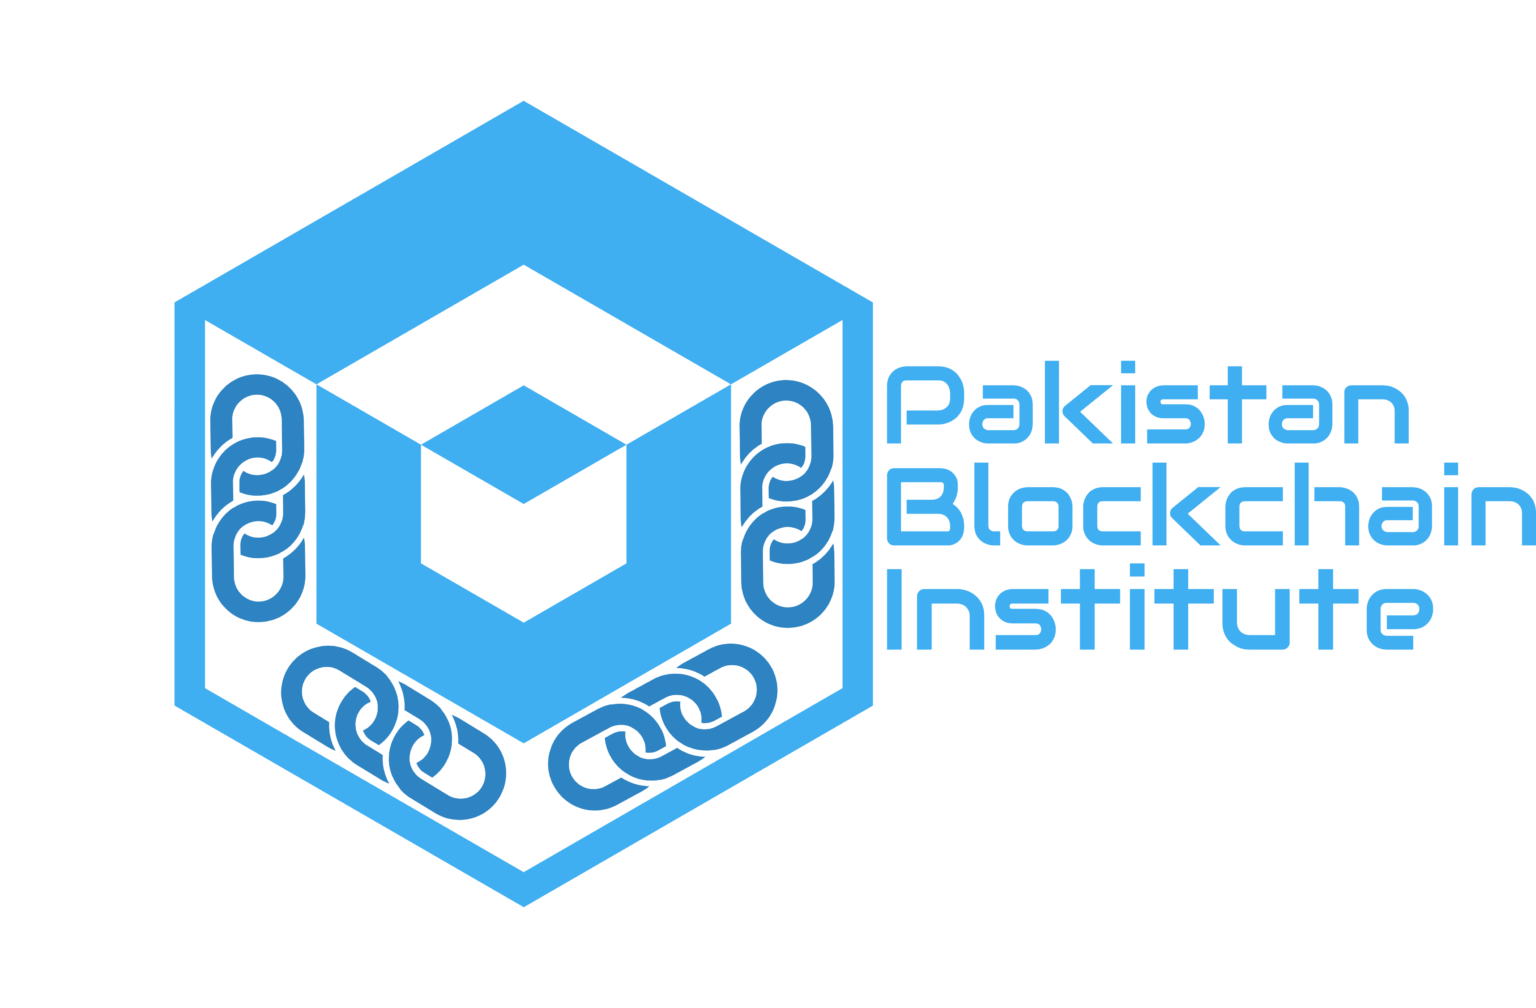 Pakistan Blockchain Institute